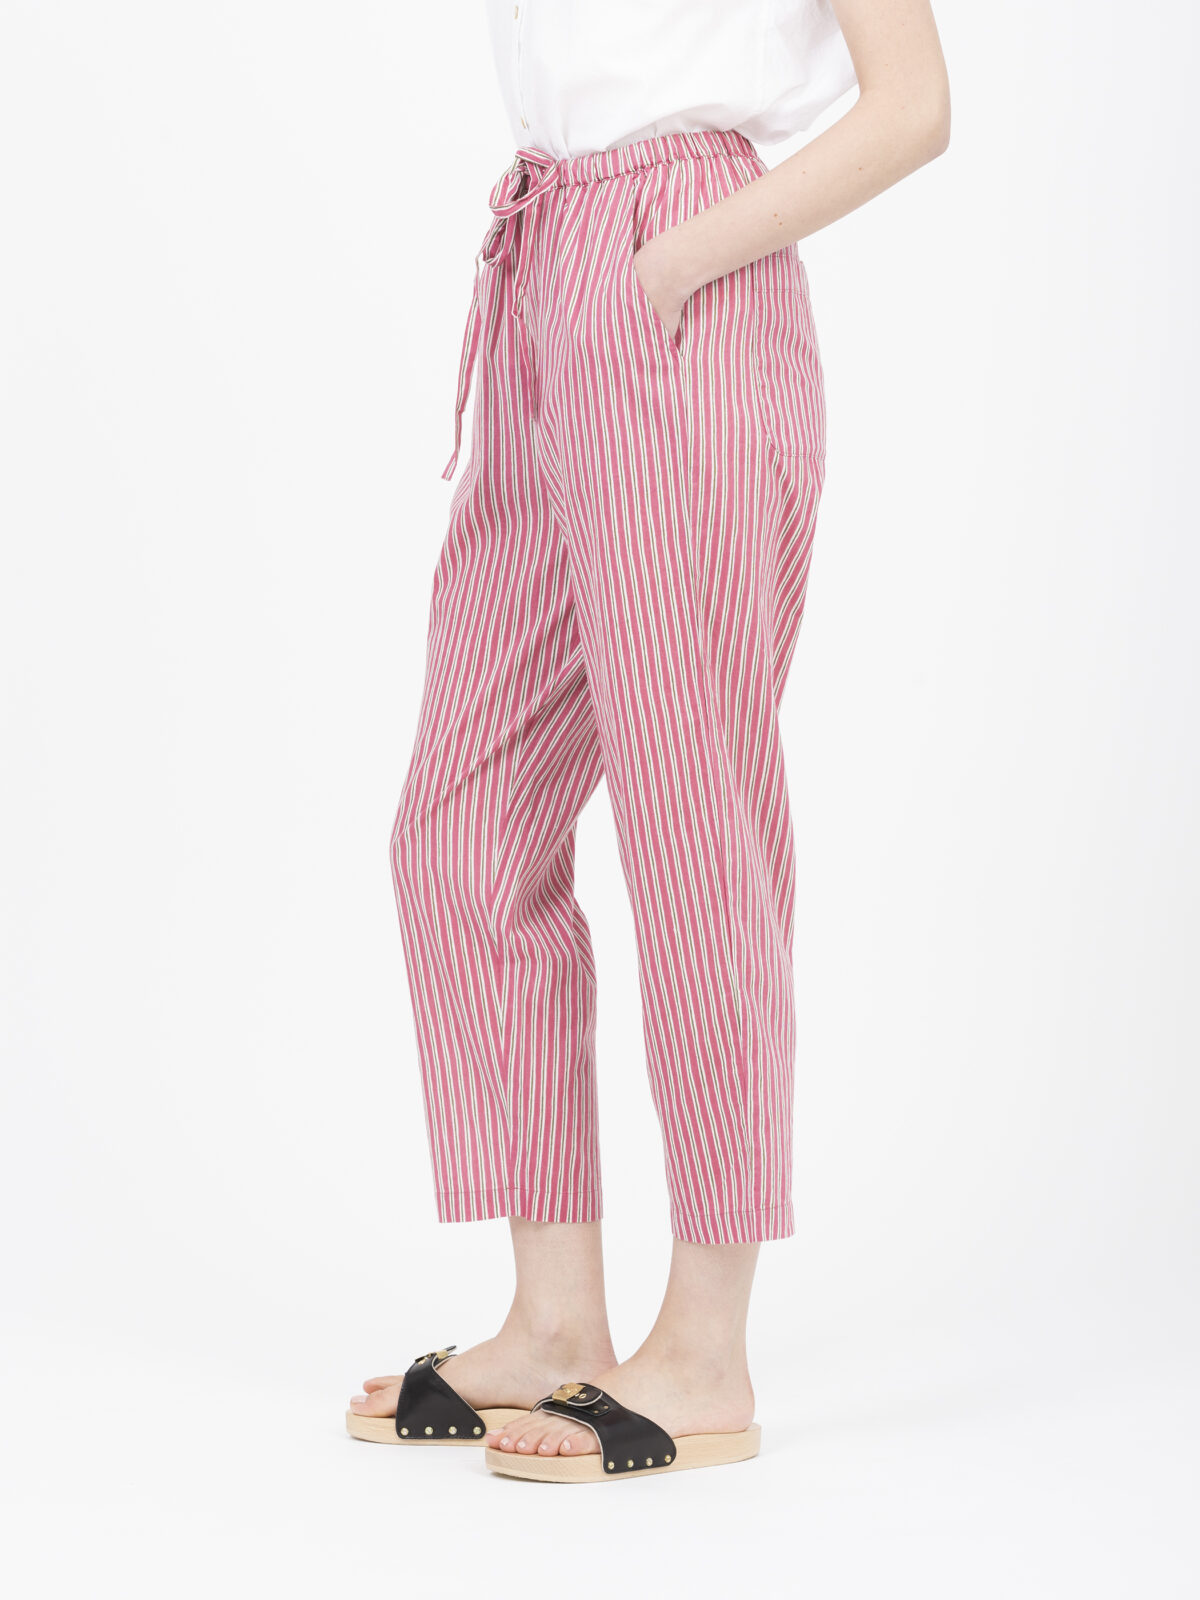 karla-pink-striped-cotton-pants-pyjamas-charlie-joe-matchboxathens